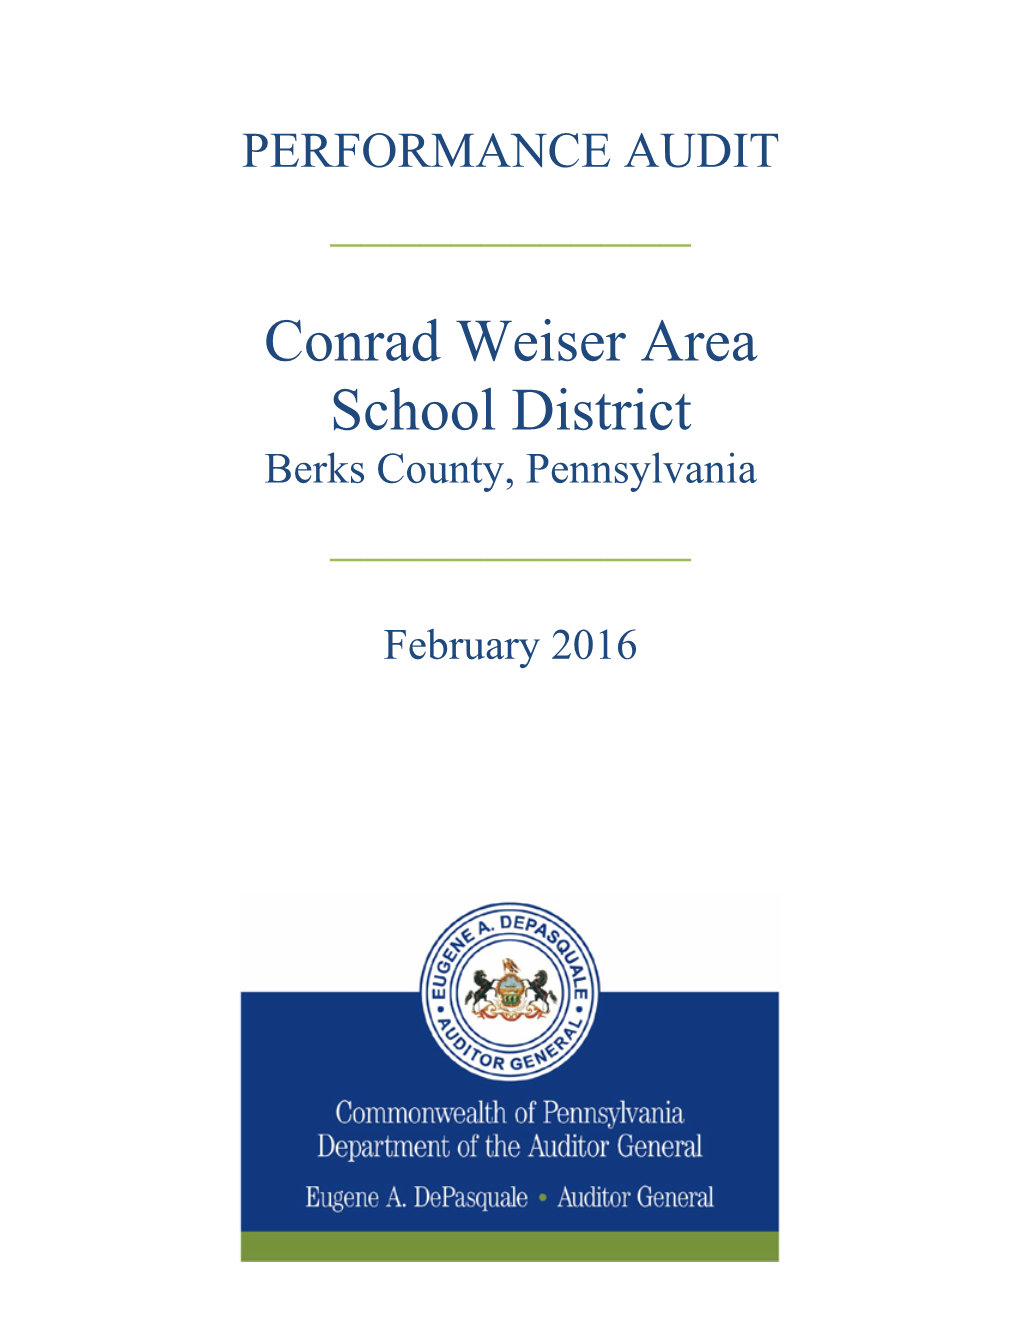 Conrad Weiser Area School District Berks County, Pennsylvania ______